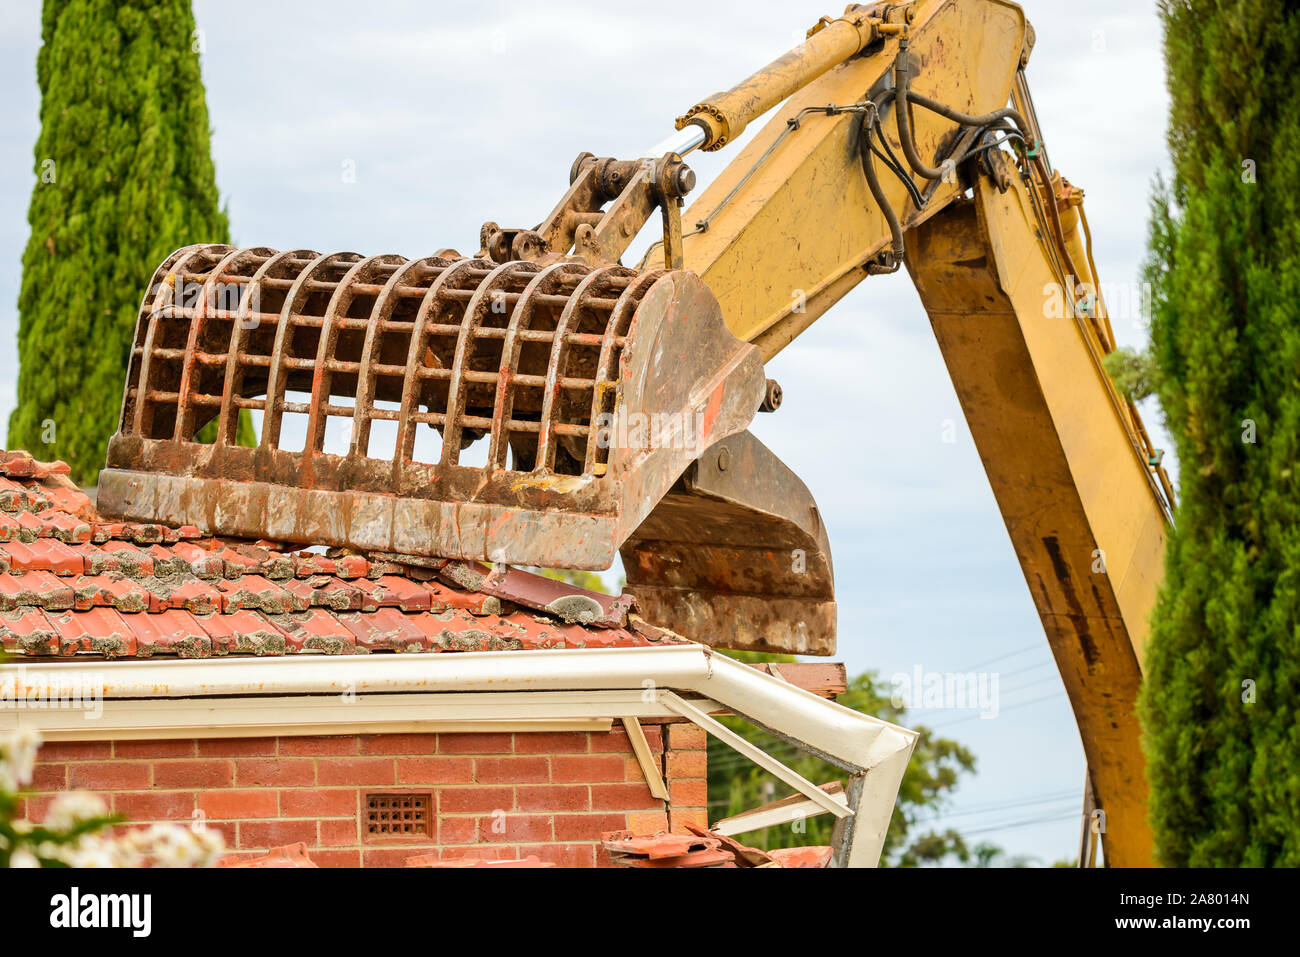 Old Australian suburban house demolition with excavator Stock Photo